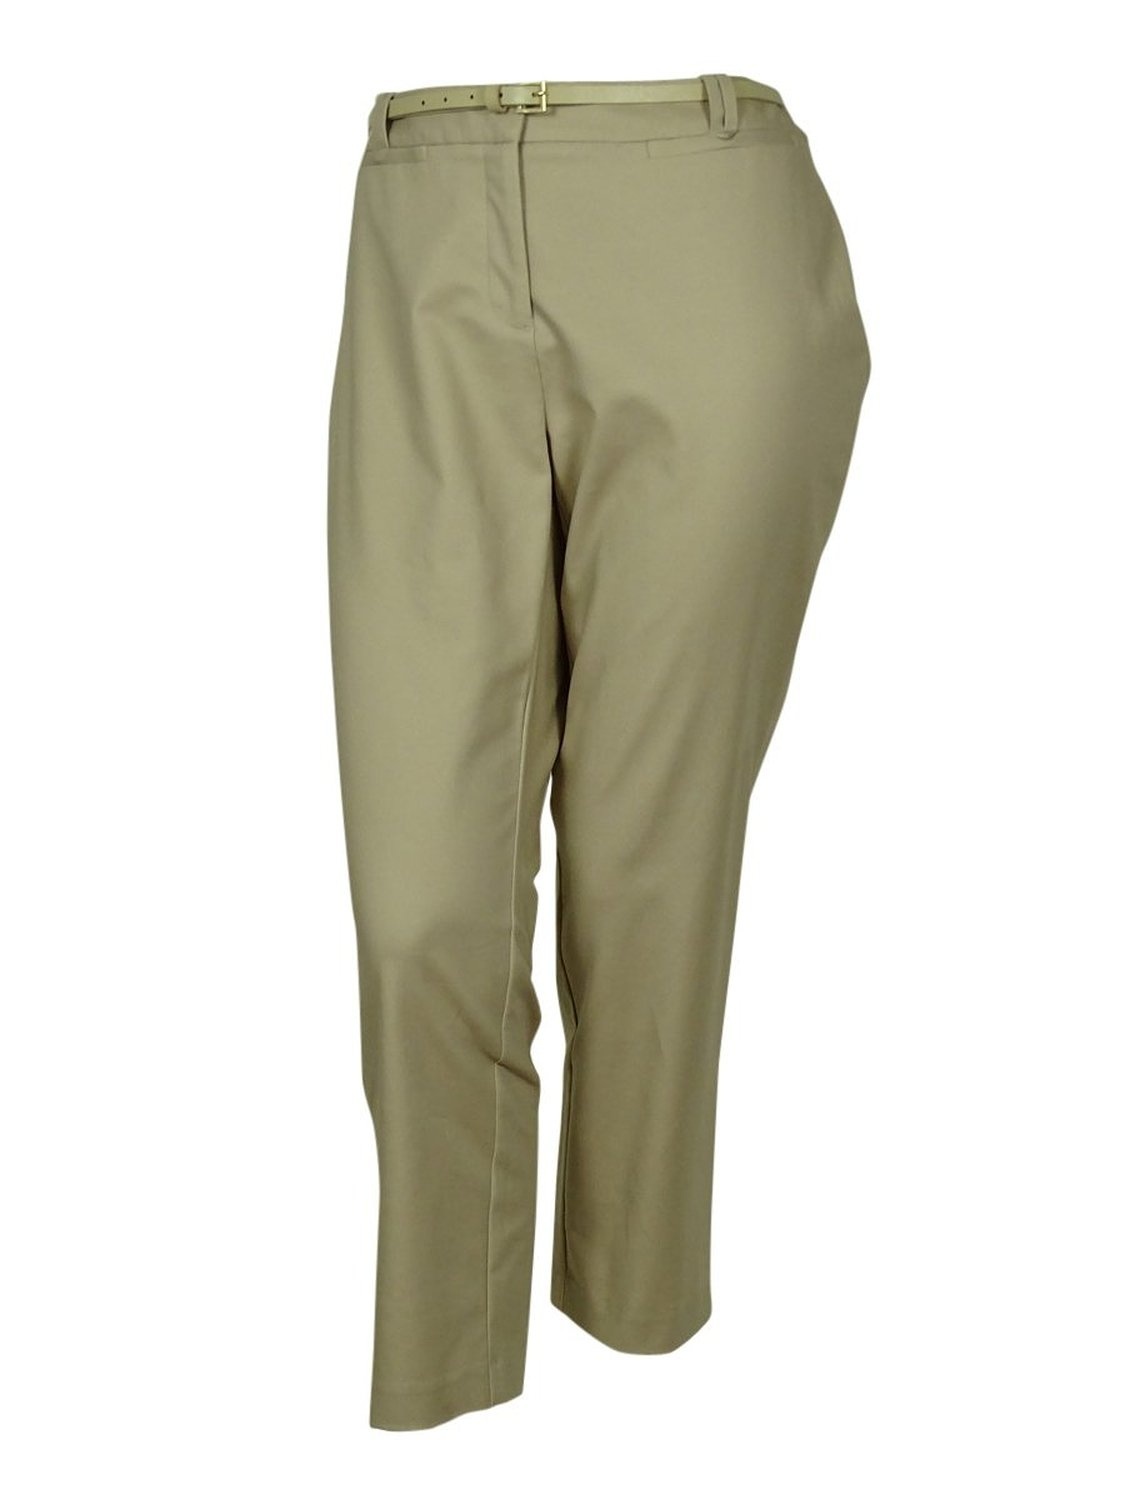 KAREN SCOTT white,green cargo pocket drawstring waist shorts,8,20W,22W,24W